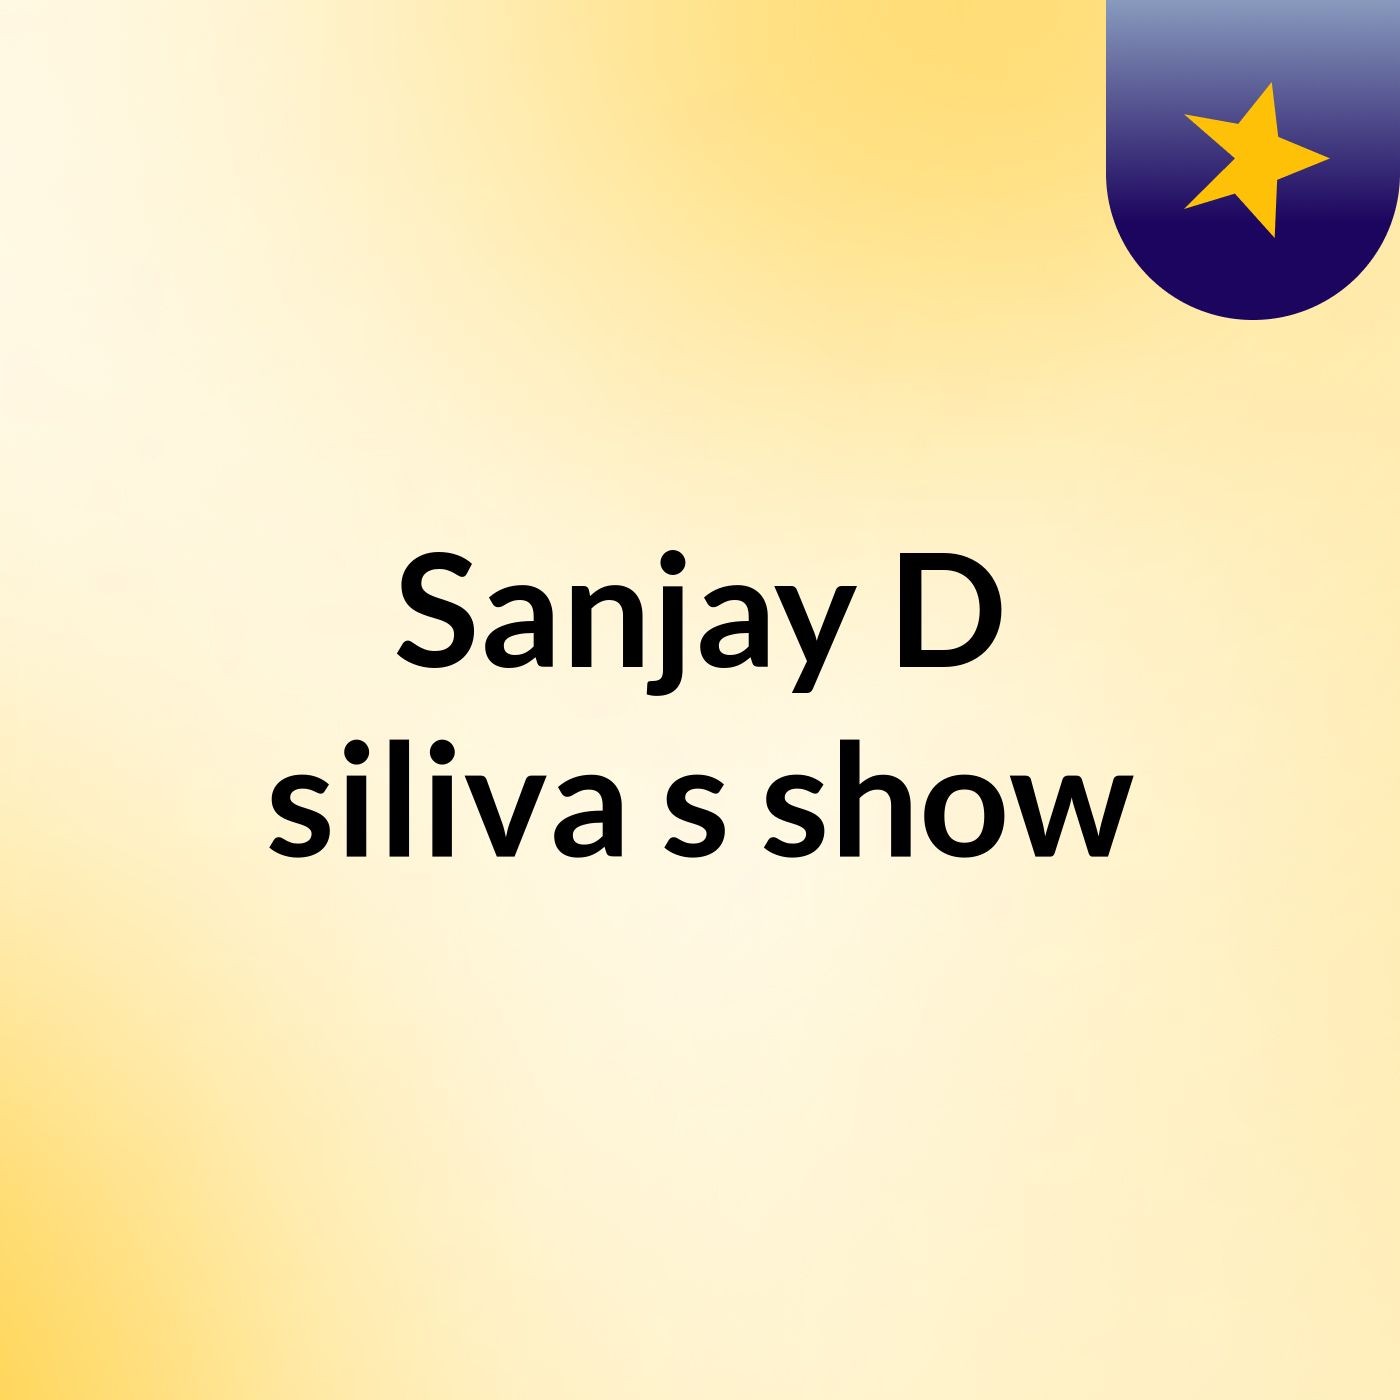 Sanjay D'siliva's show